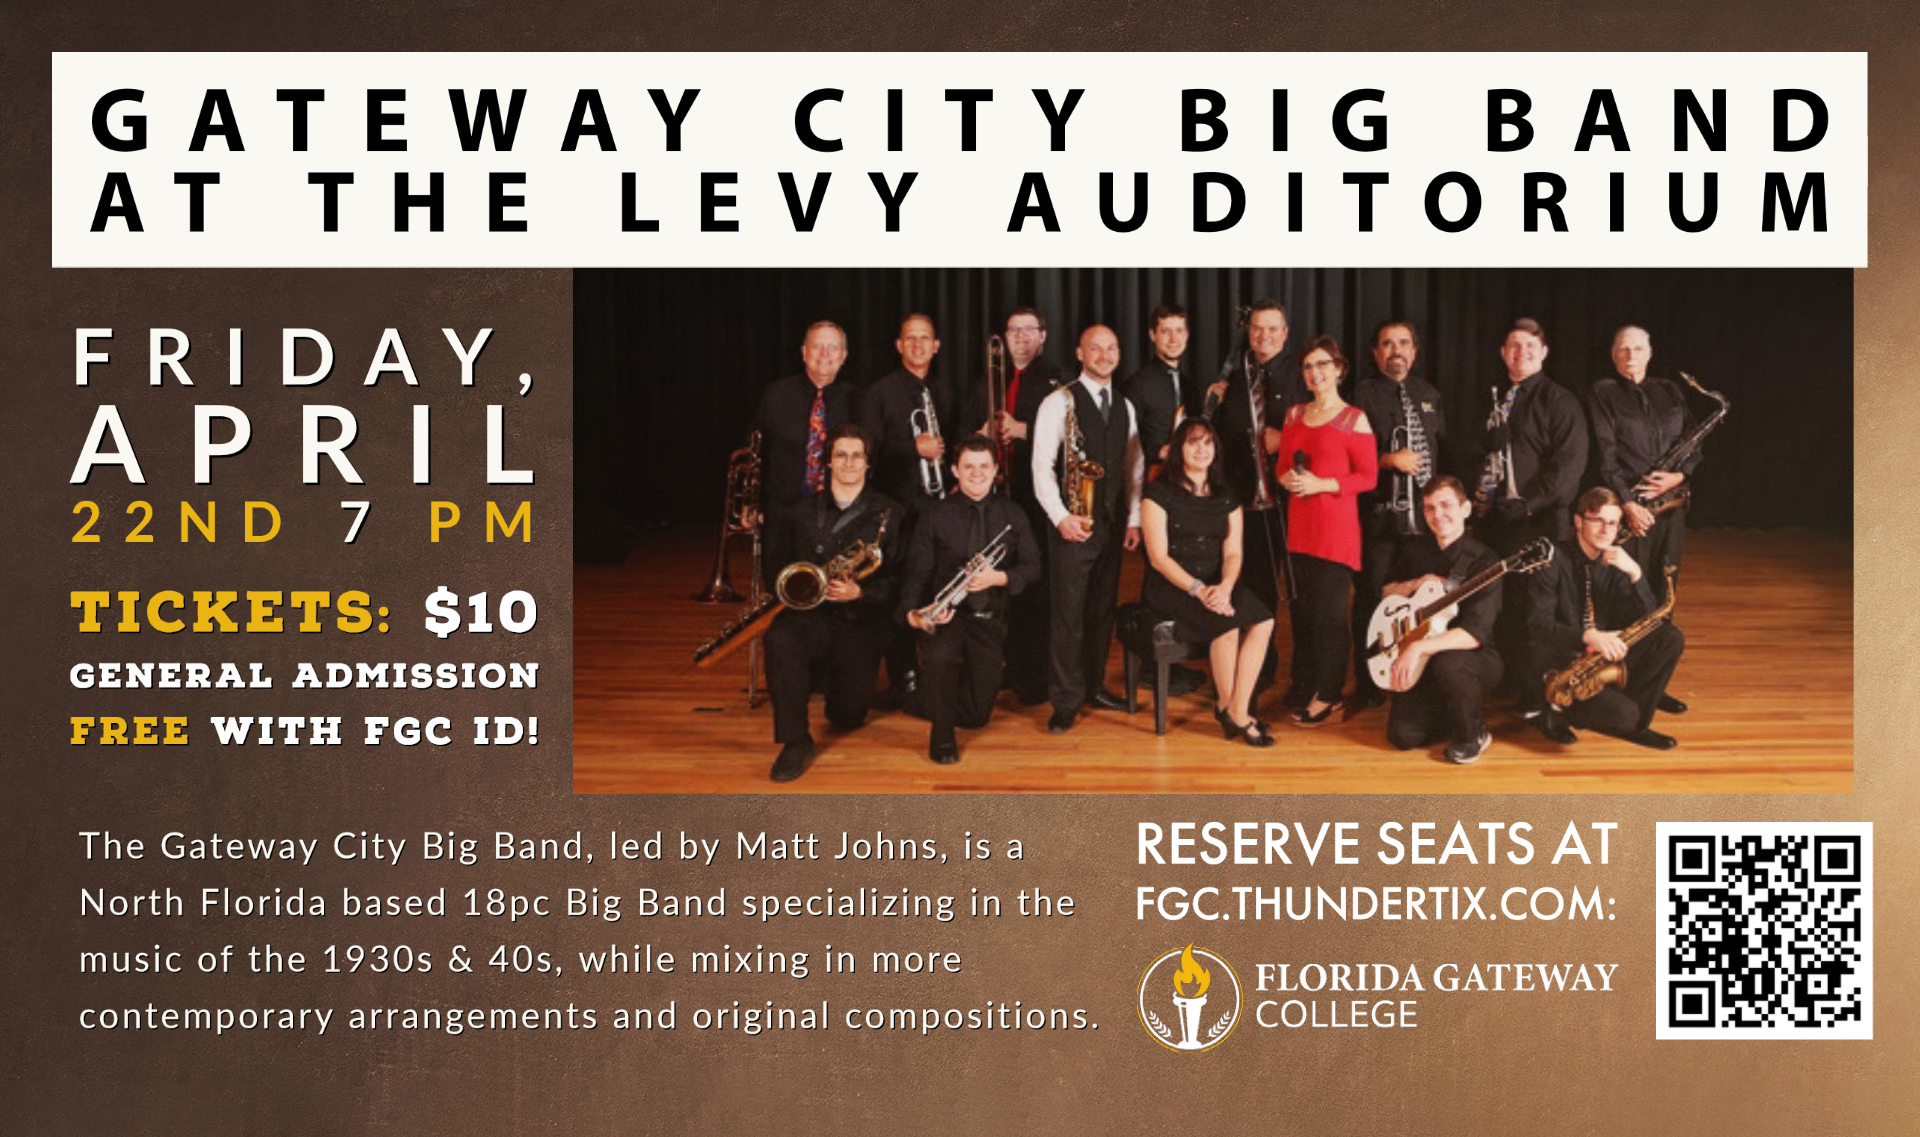 Gateway City Big Band to Perform at FGC